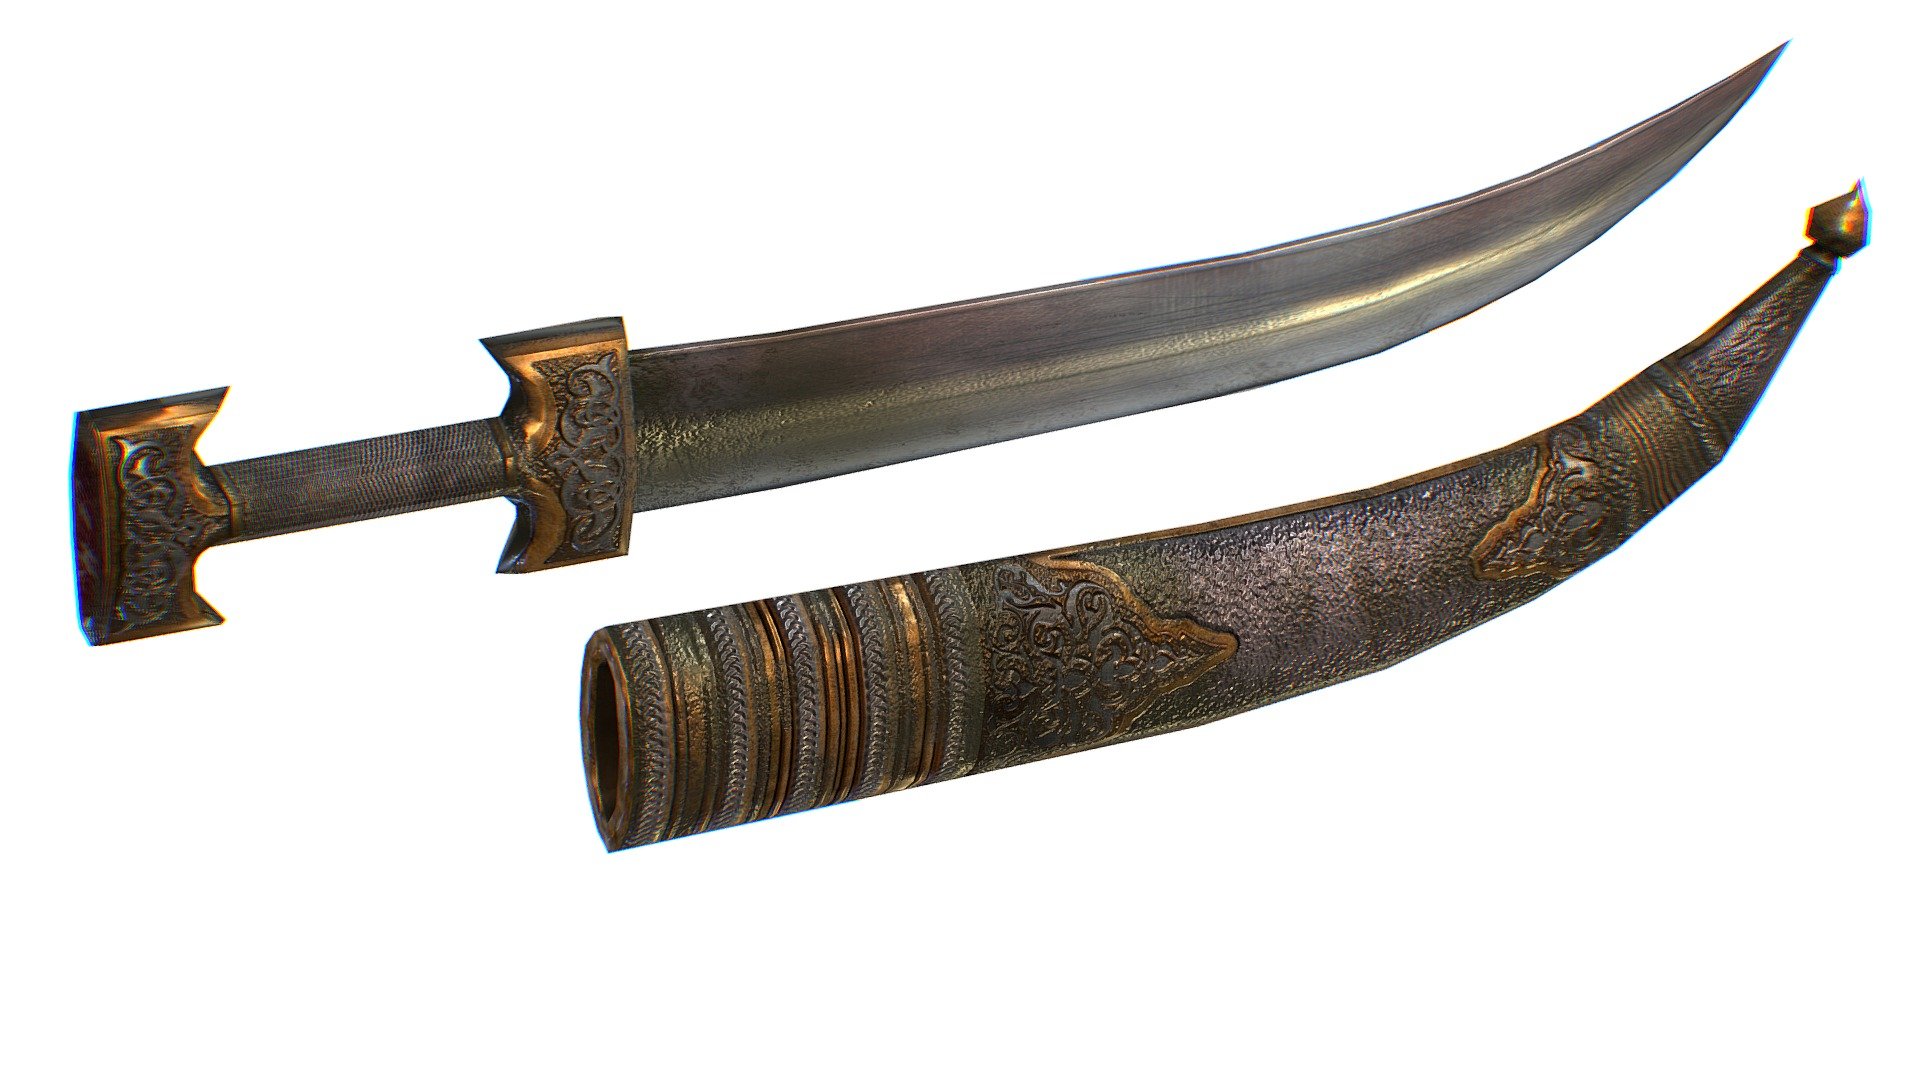 Persian Dagger Fighting Knife Af LowPoly model -1024x1024 textures, 3dsMaya file included 3d model